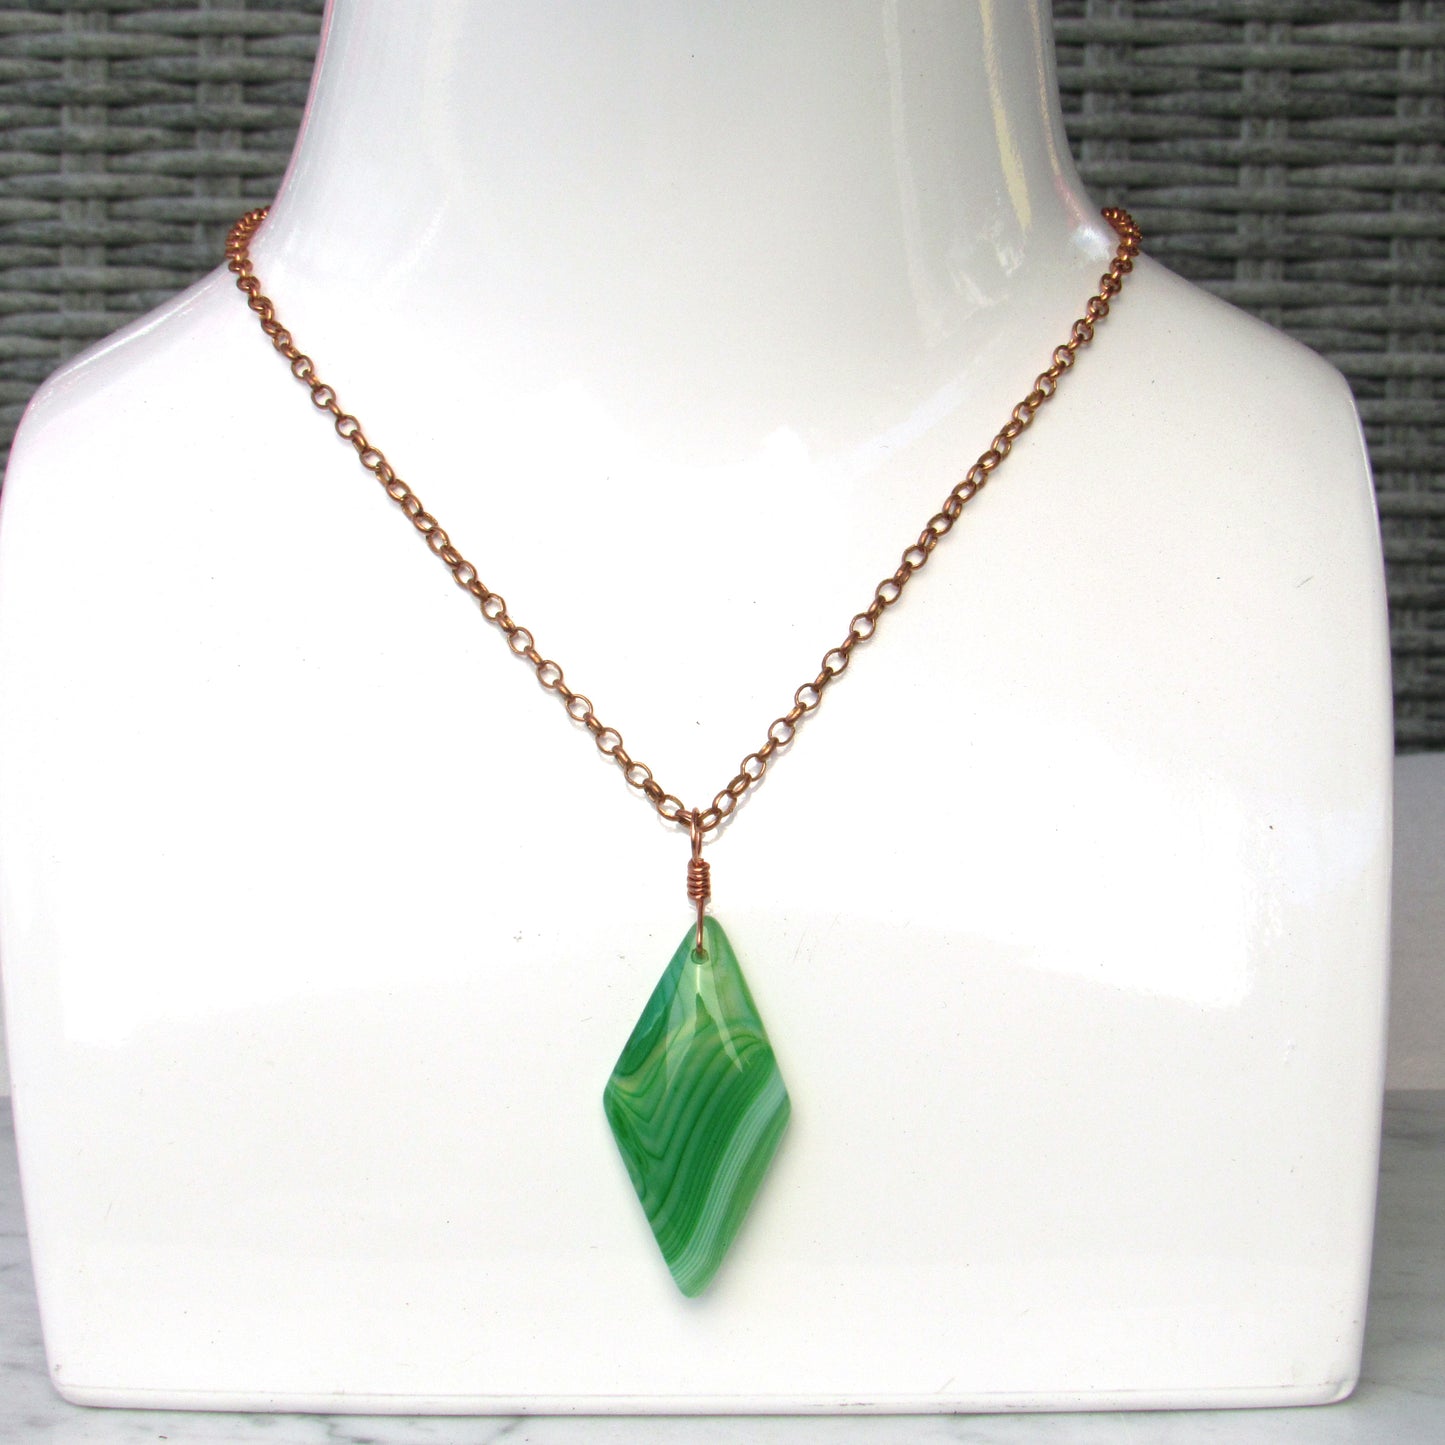 Green Agate gemstone pendant on genuine copper chain necklace